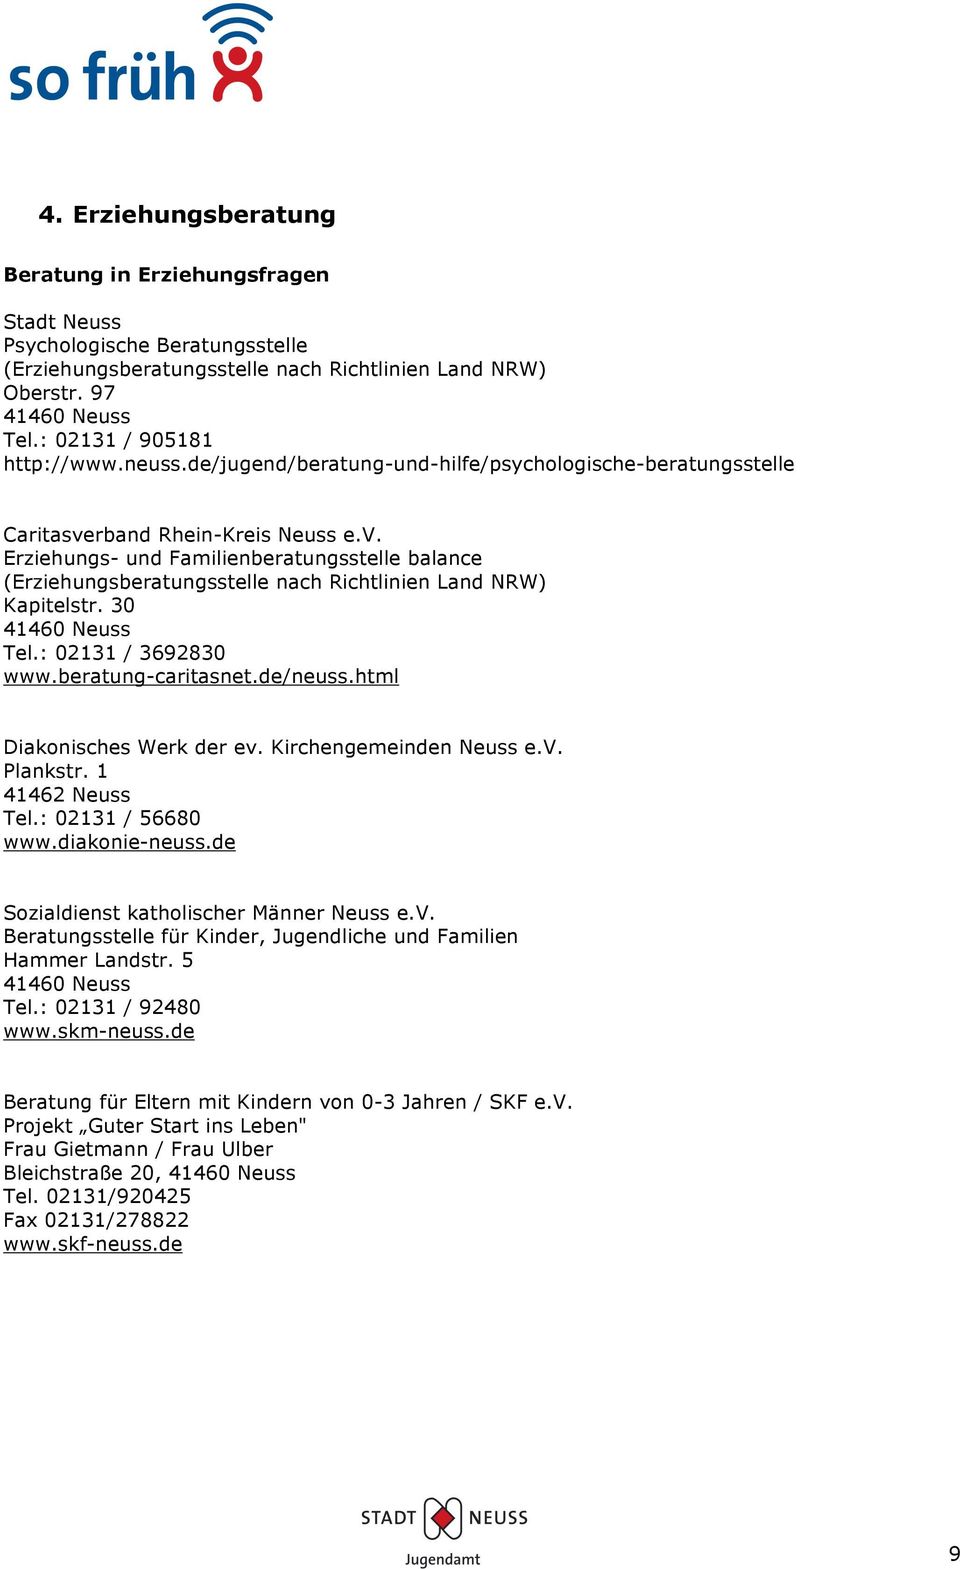 rband Rhein-Kreis Neuss e.v. Erziehungs- und Familienberatungsstelle balance (Erziehungsberatungsstelle nach Richtlinien Land NRW) Kapitelstr. 30 Tel.: 02131 / 3692830 www.beratung-caritasnet.